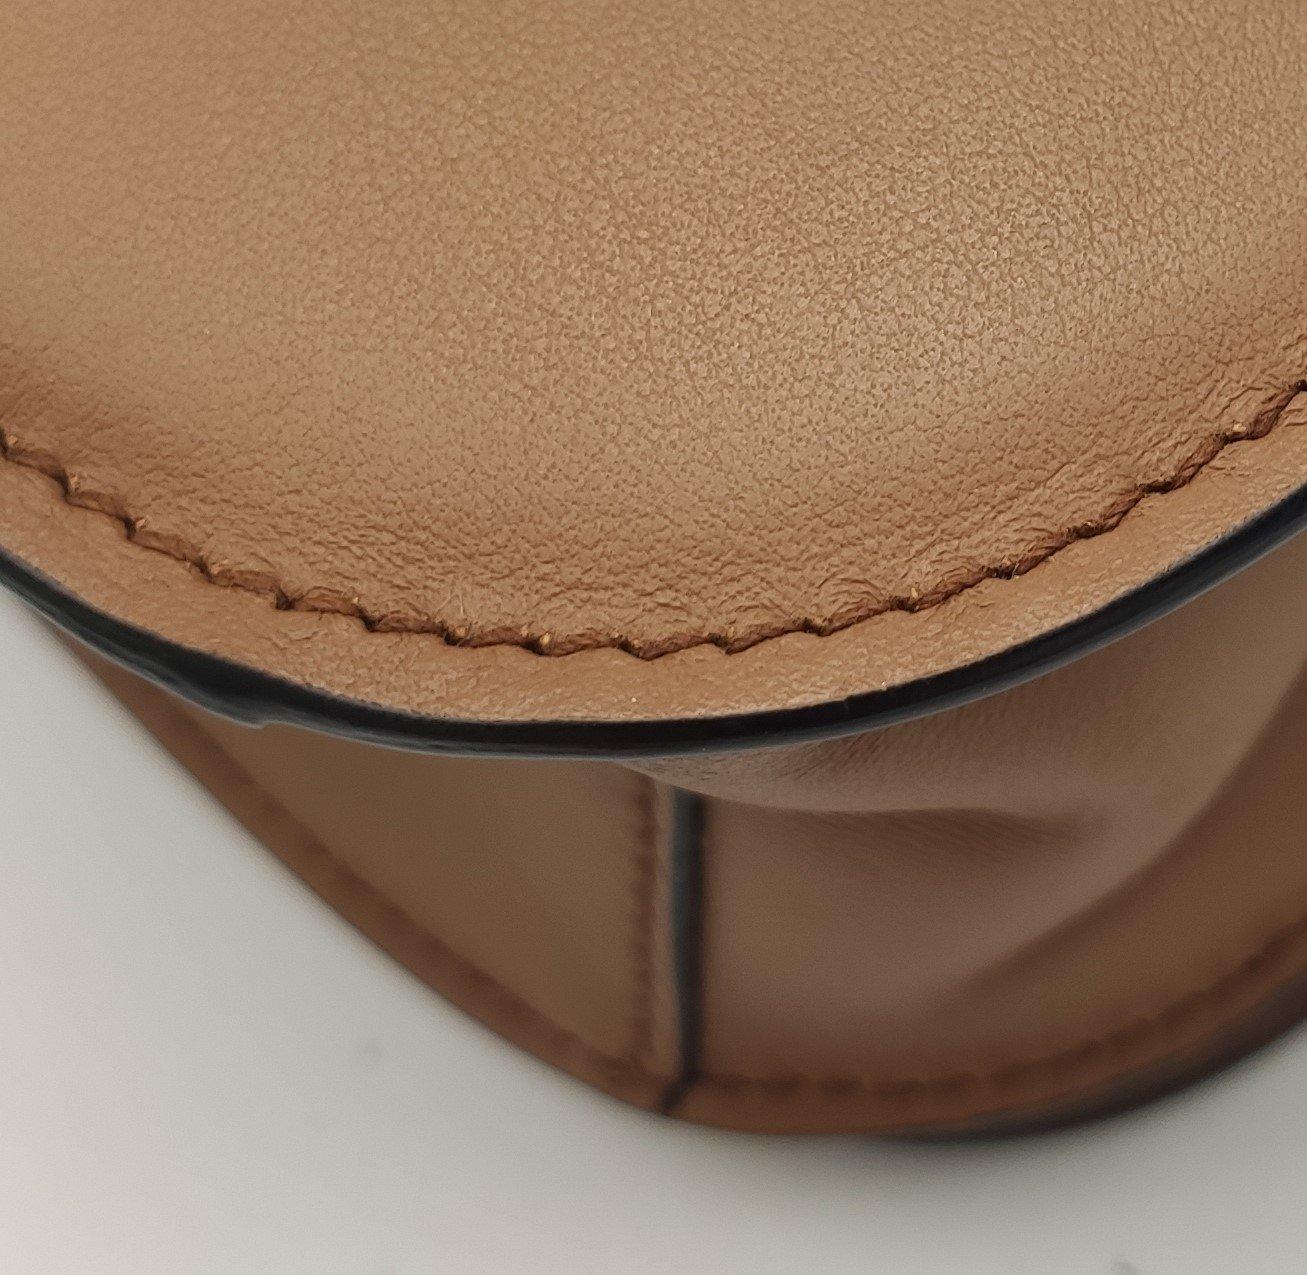 PRADA Pionniere Shoulder bag in Brown Leather 4